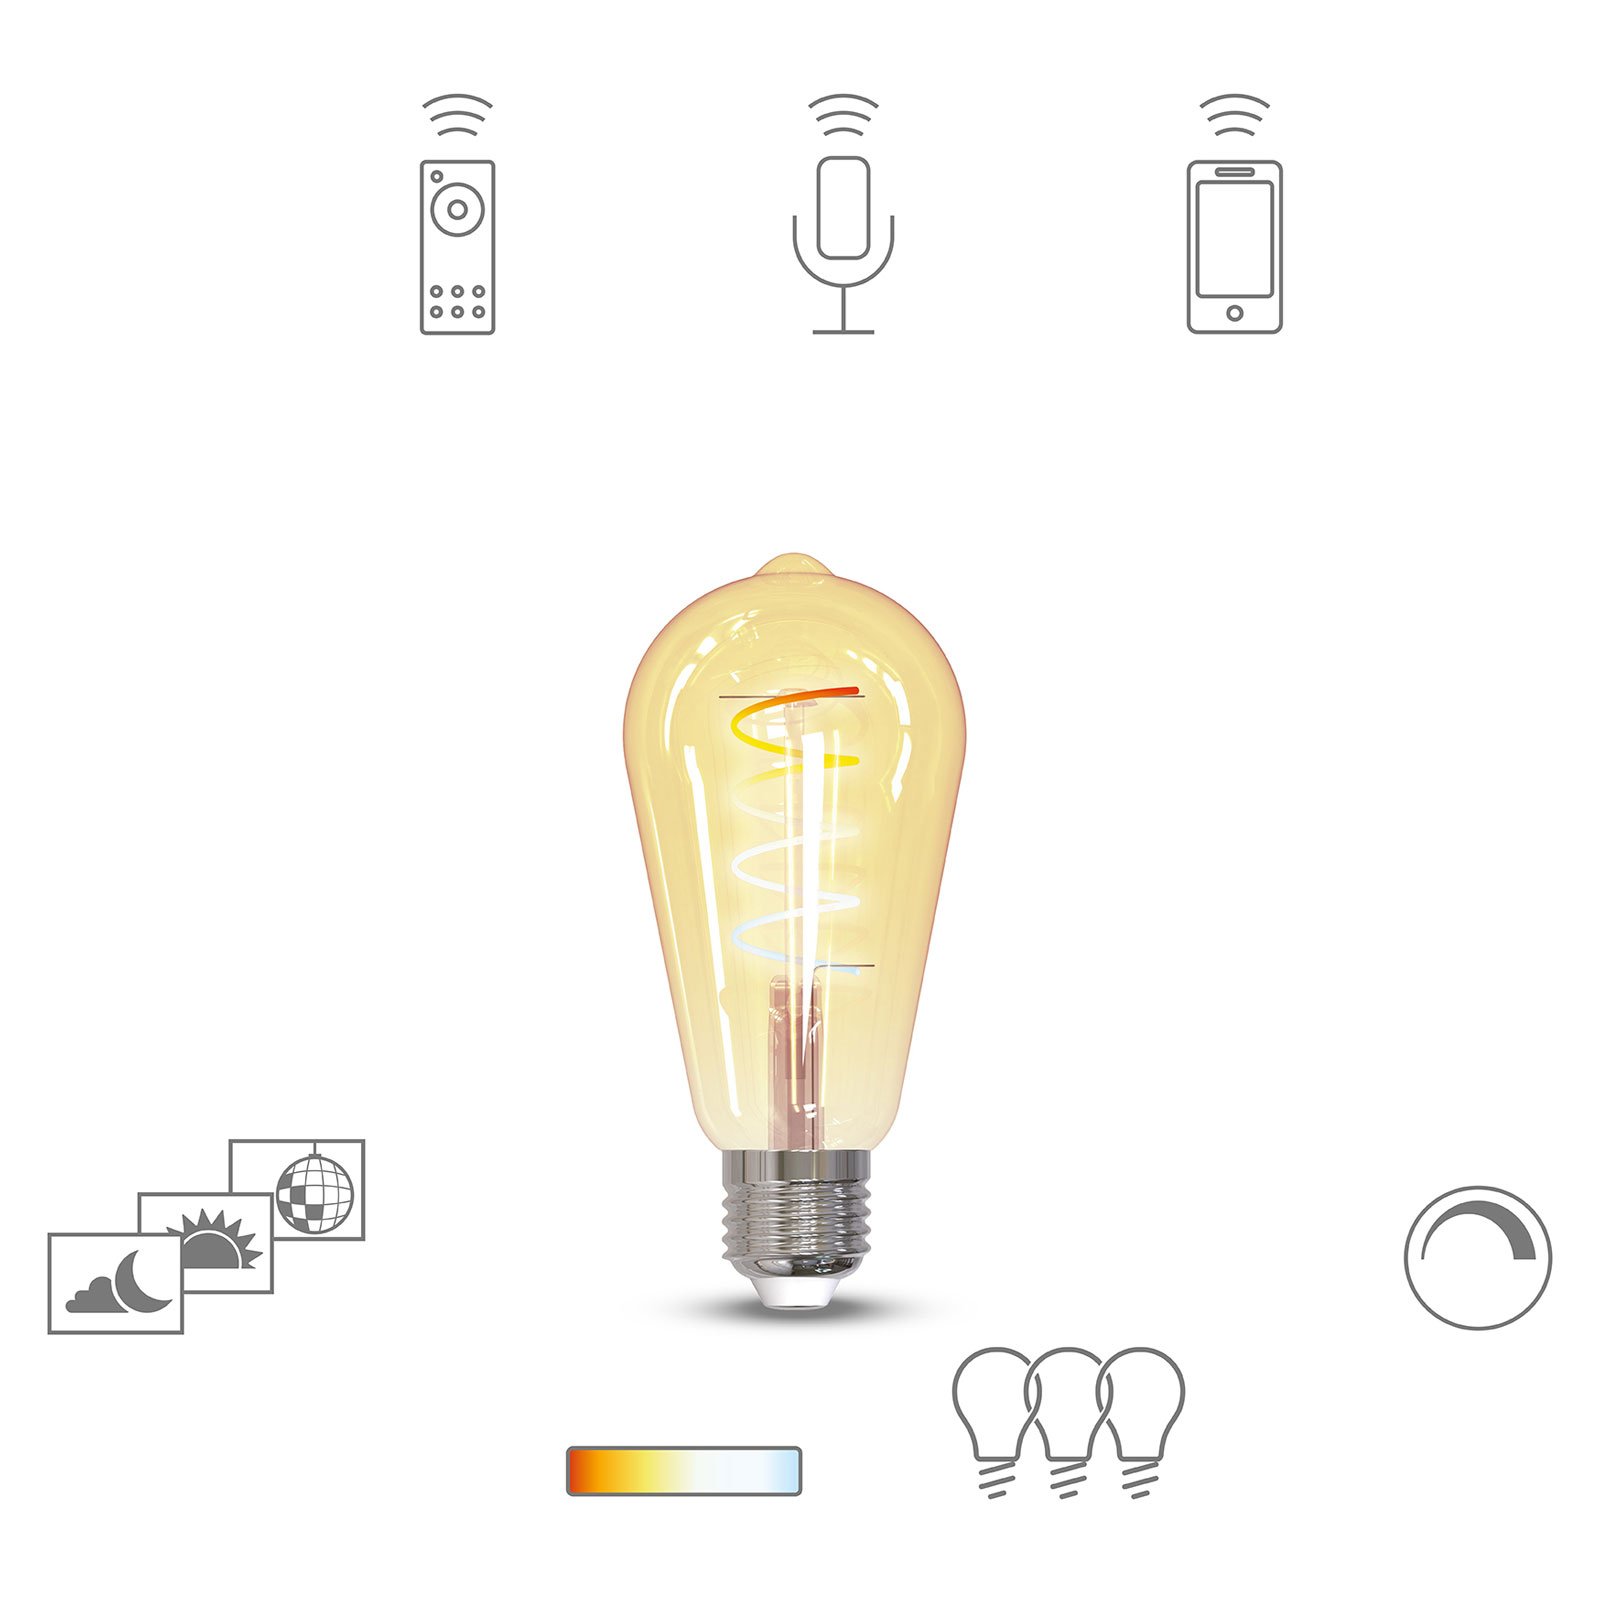 Müller Licht tint LED-Lampe Retro Gold E27 5,5W